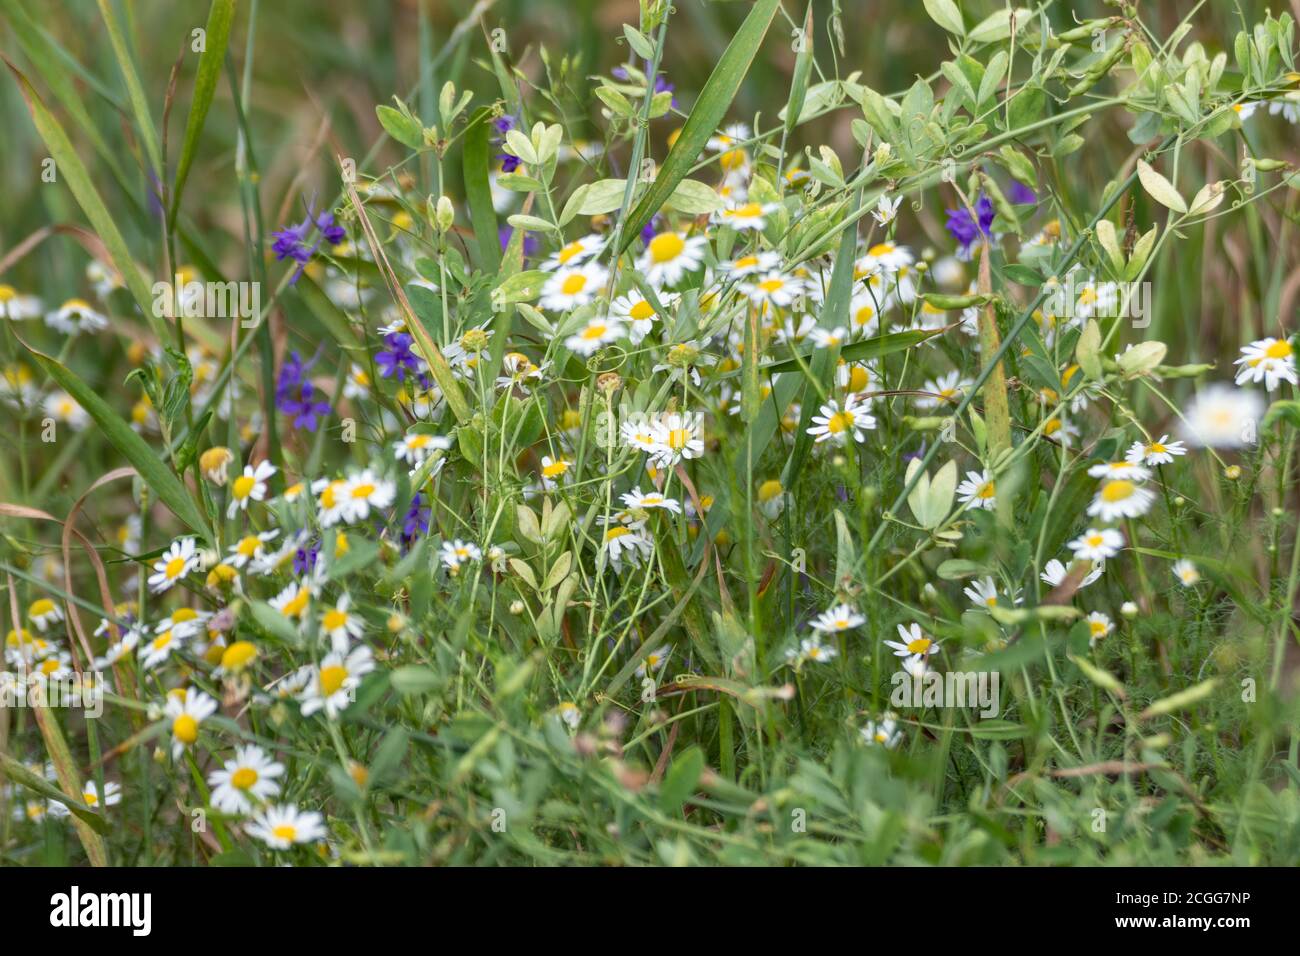 Sweet tiny white wild daisy like flowers in wild nature field in green, yellow and purple flowers around environment. Erigeron strigosus Stock Photo